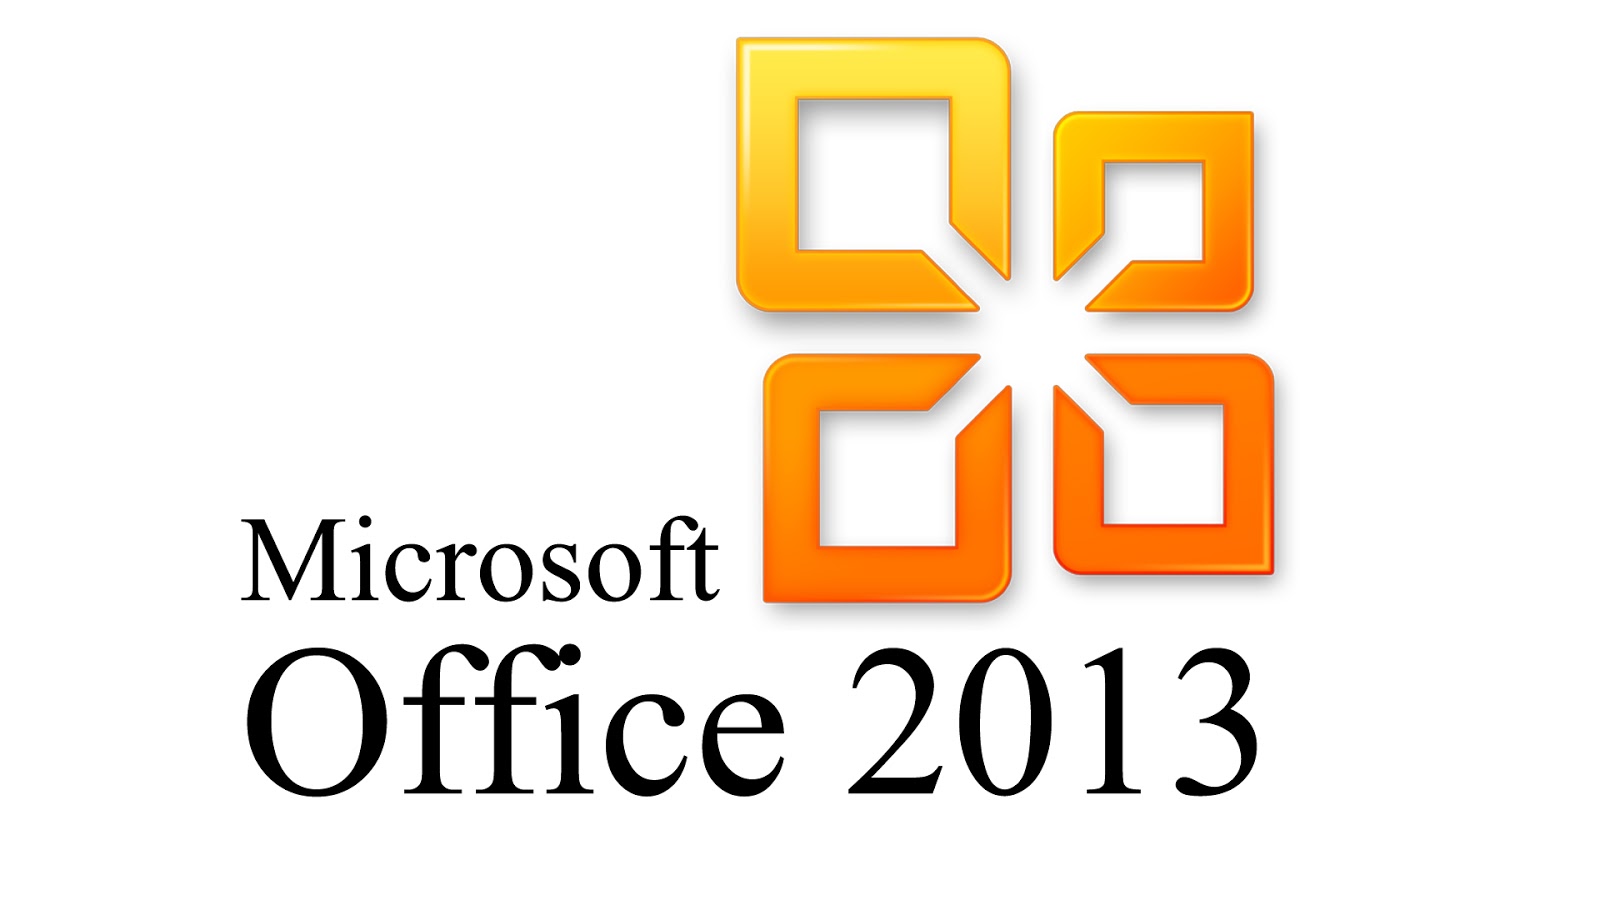 Microsoft Office 2013 УЖЕ В ПРОДАЖЕ!